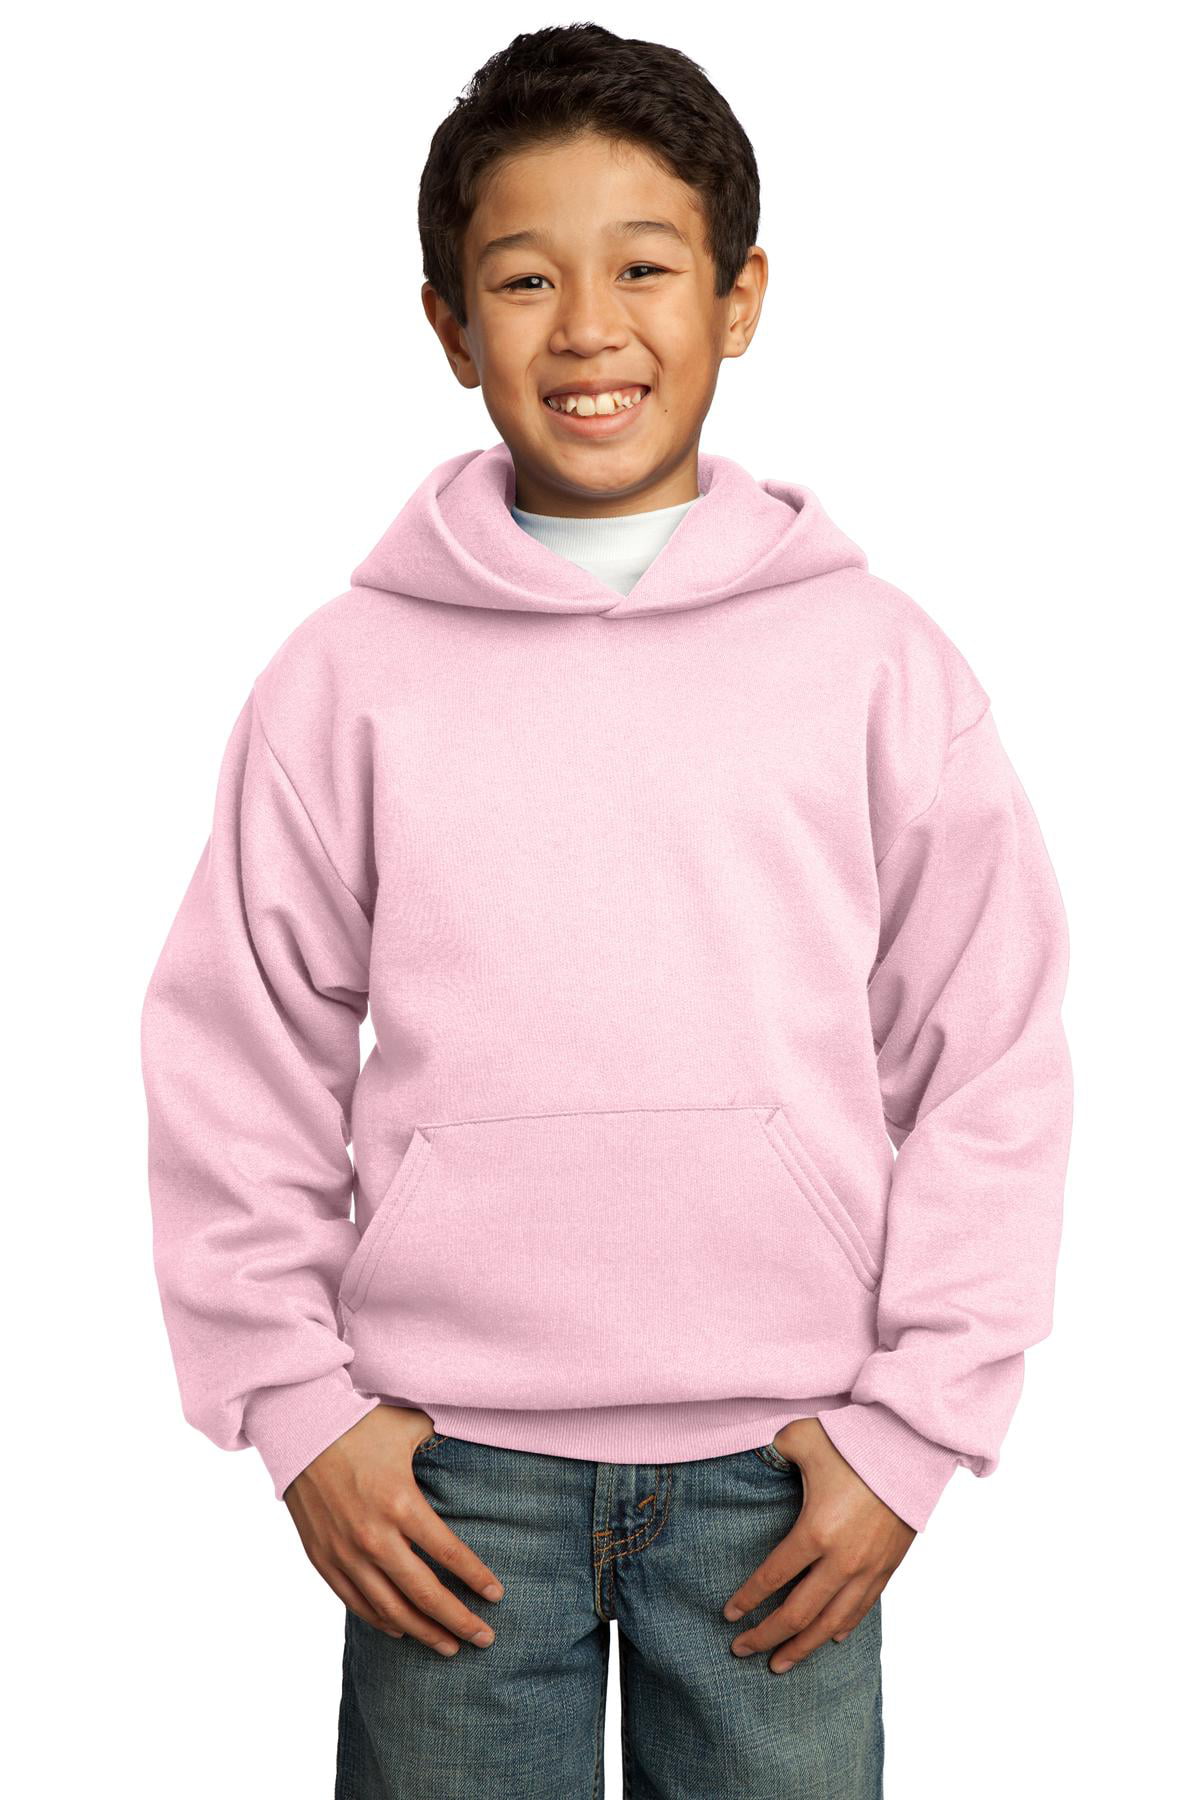 XL Teen Boys Girls Hoodies Pullover Kids Hooded Sweatshirts 